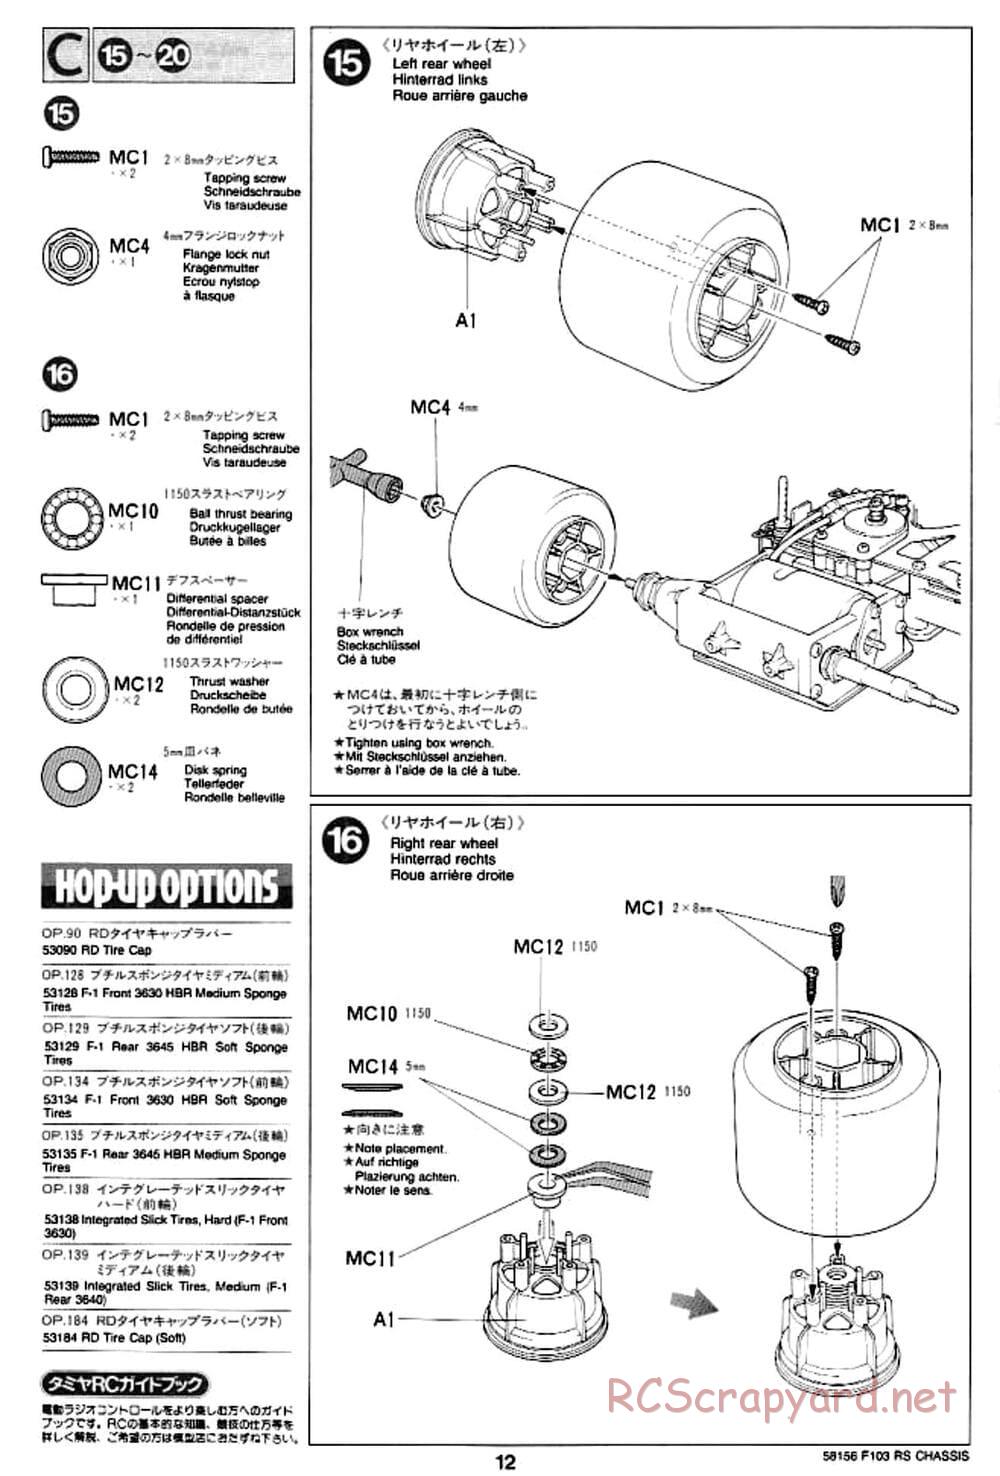 Tamiya - F103RS Chassis - Manual - Page 12